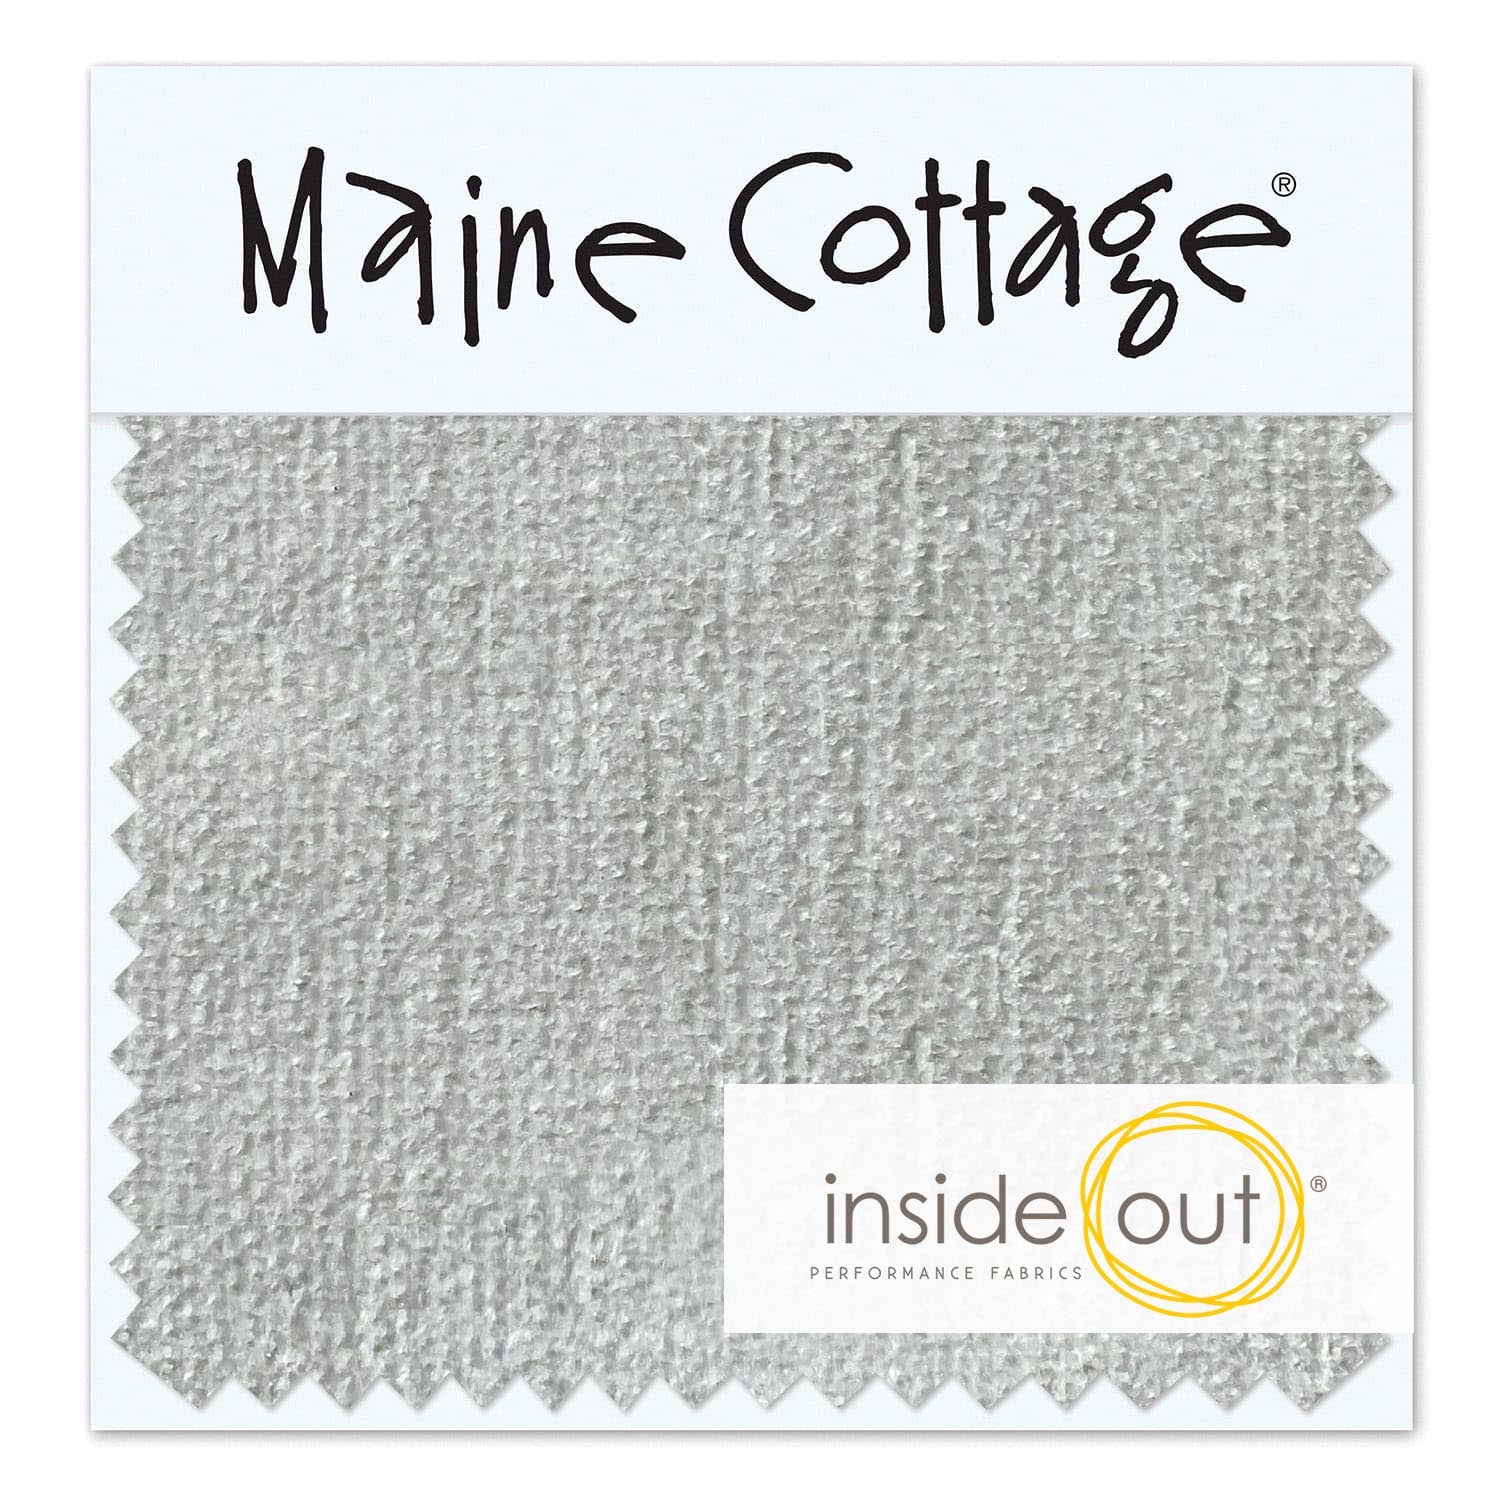 Maine Cottage Plain Jane: Bright White Fabric Sample | Maine Cottage® 